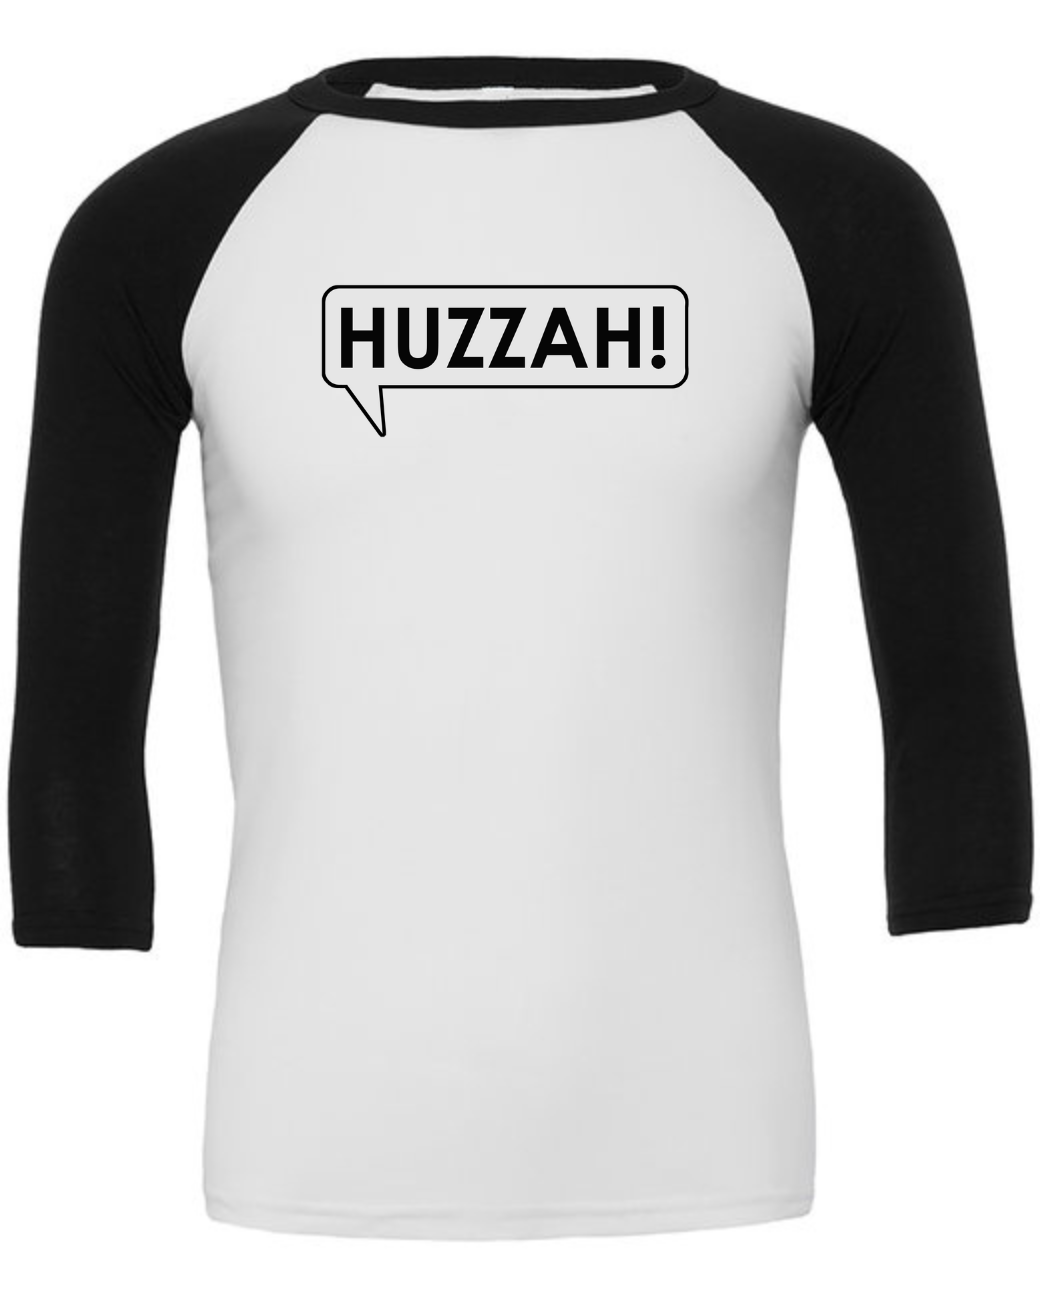 LIMITED EDITION: NFT Signed Huzzah Baseball Tee